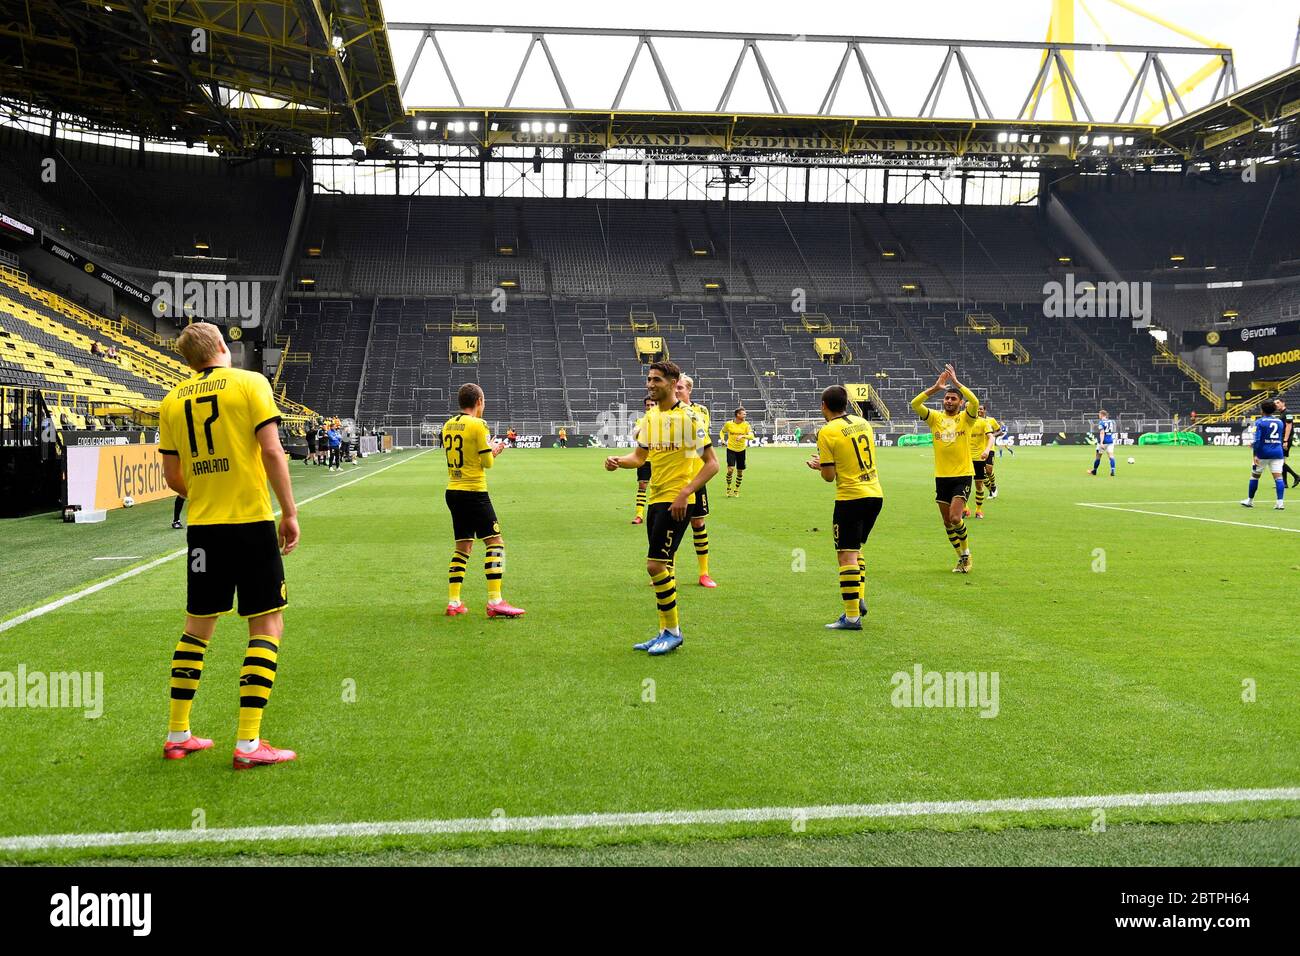 Dortmund's Erling Haaland, left, celebrates after scoring the opening goal during the German Bundesliga soccer match between Borussia Dortmund and Schalke 04 in Dortmund, Germany. Stock Photo